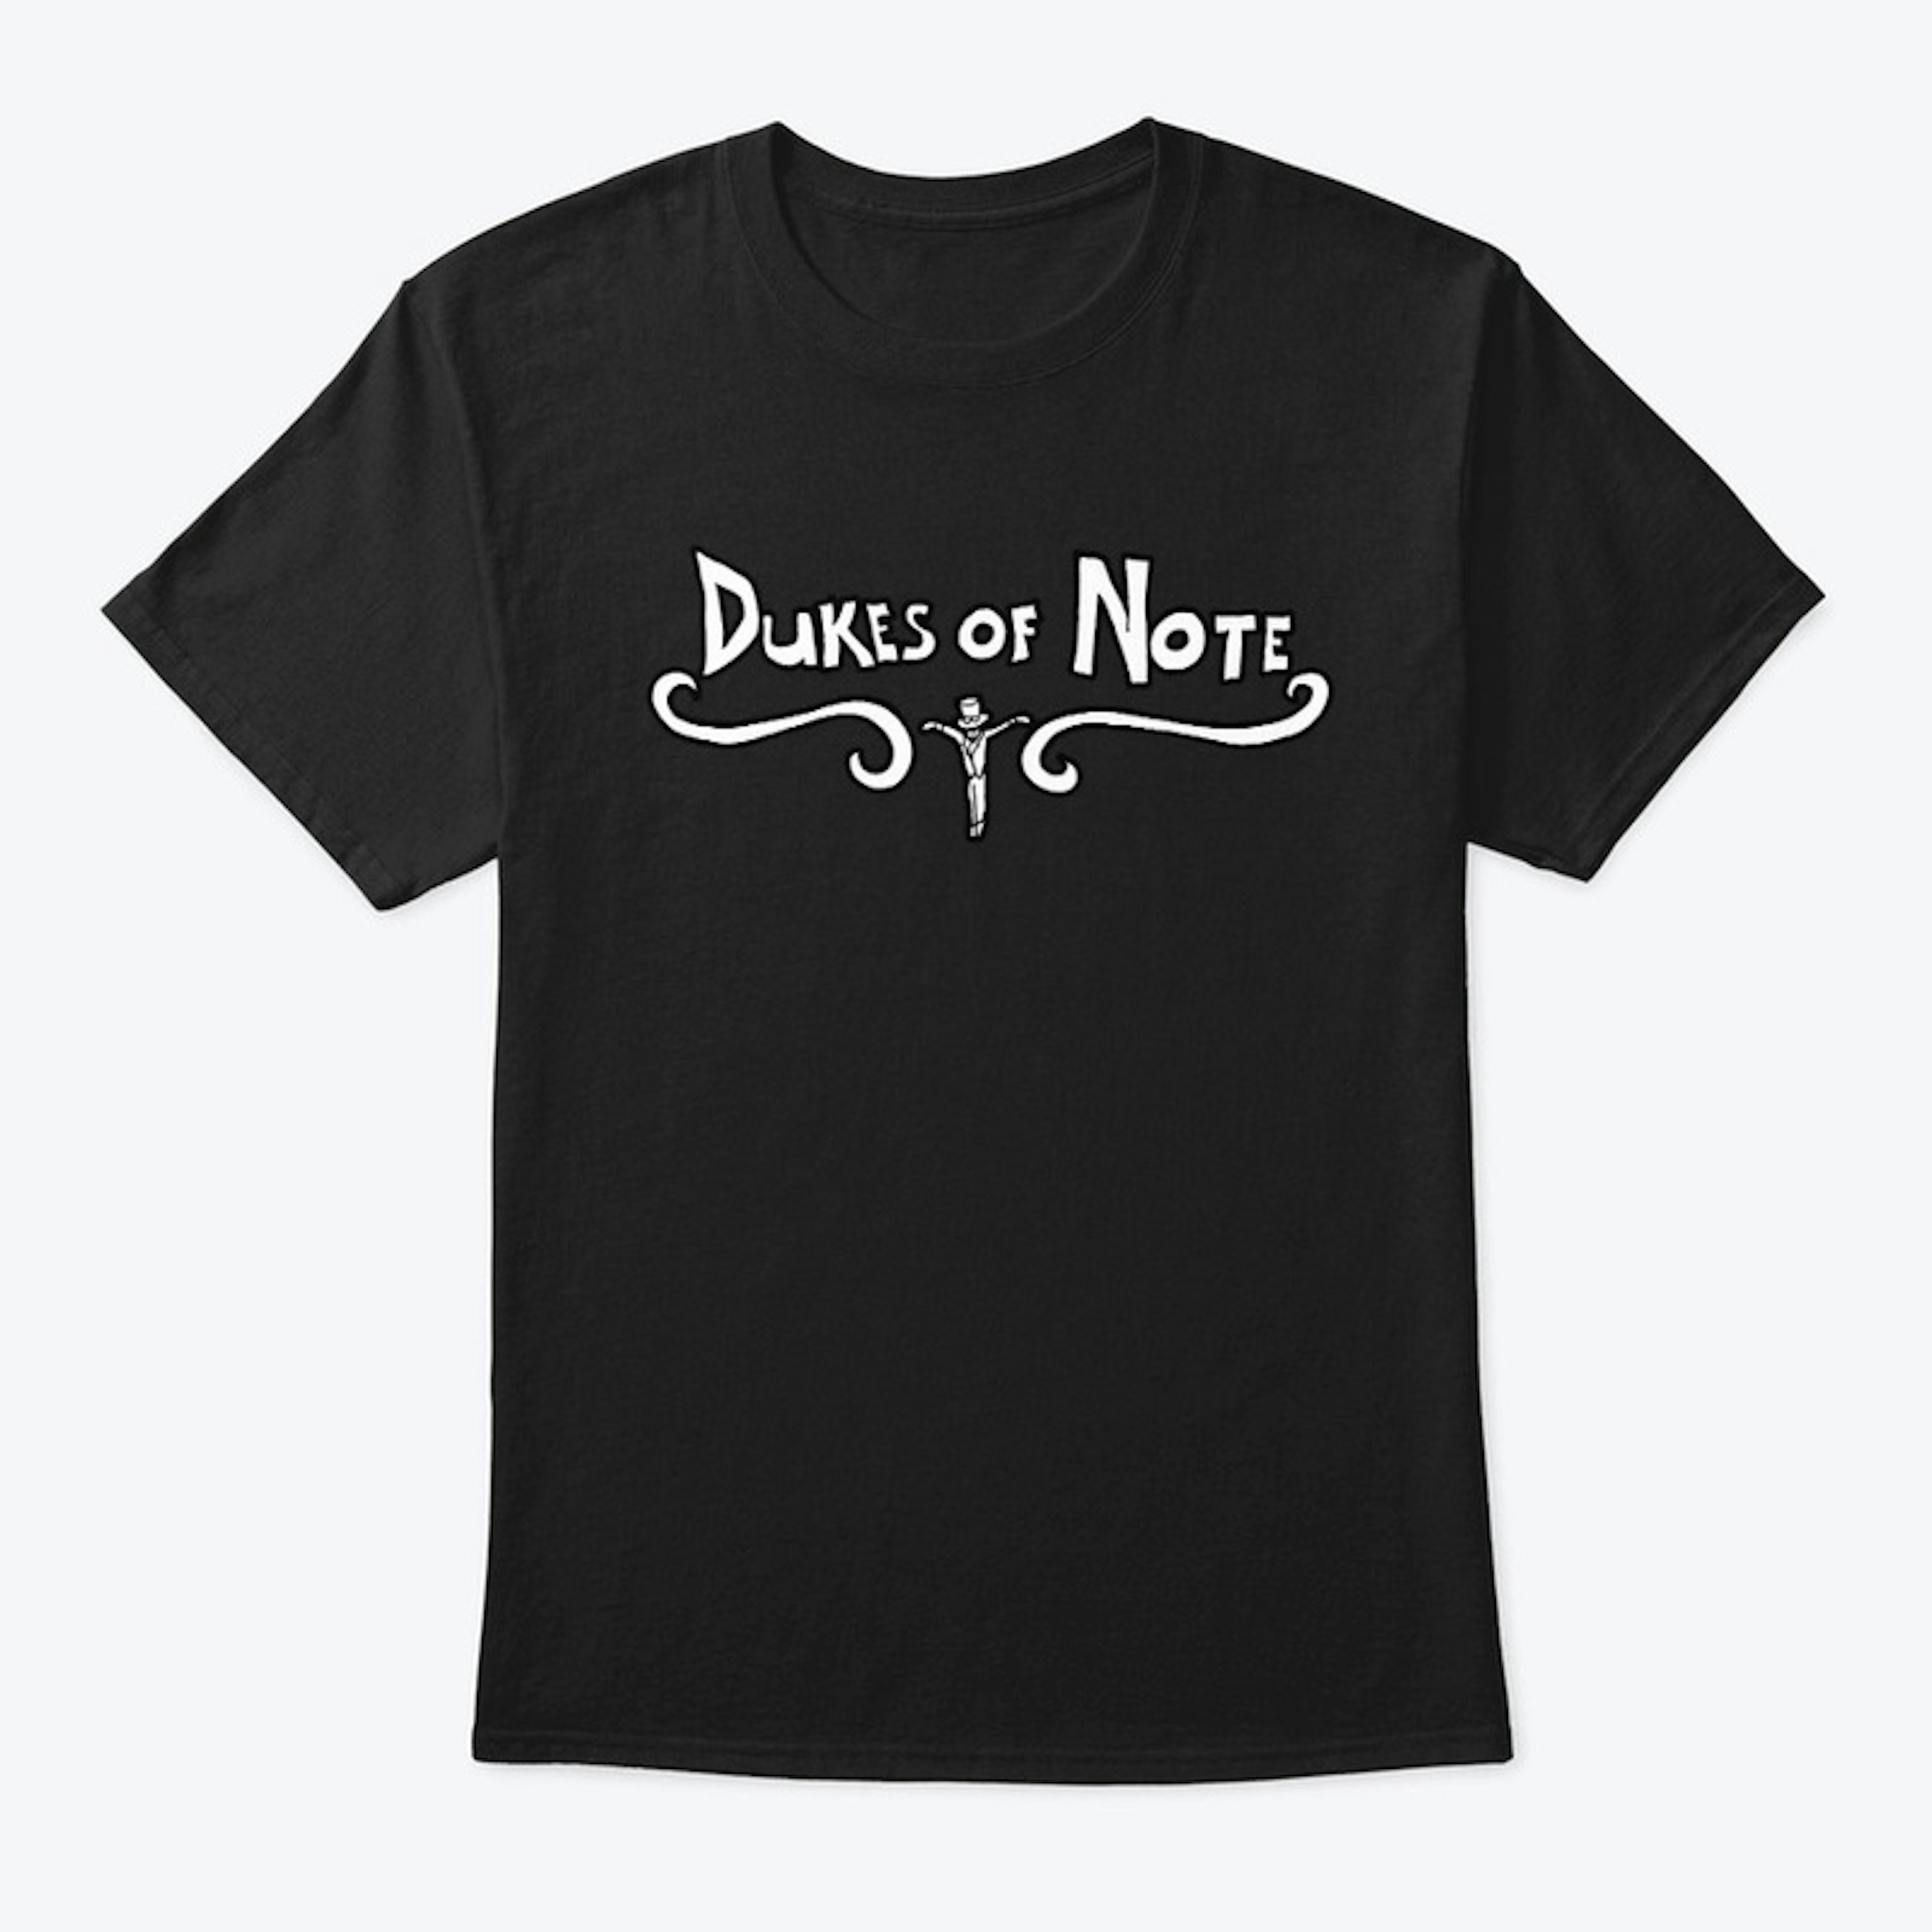 Dukes of Note - Black T-Shirt